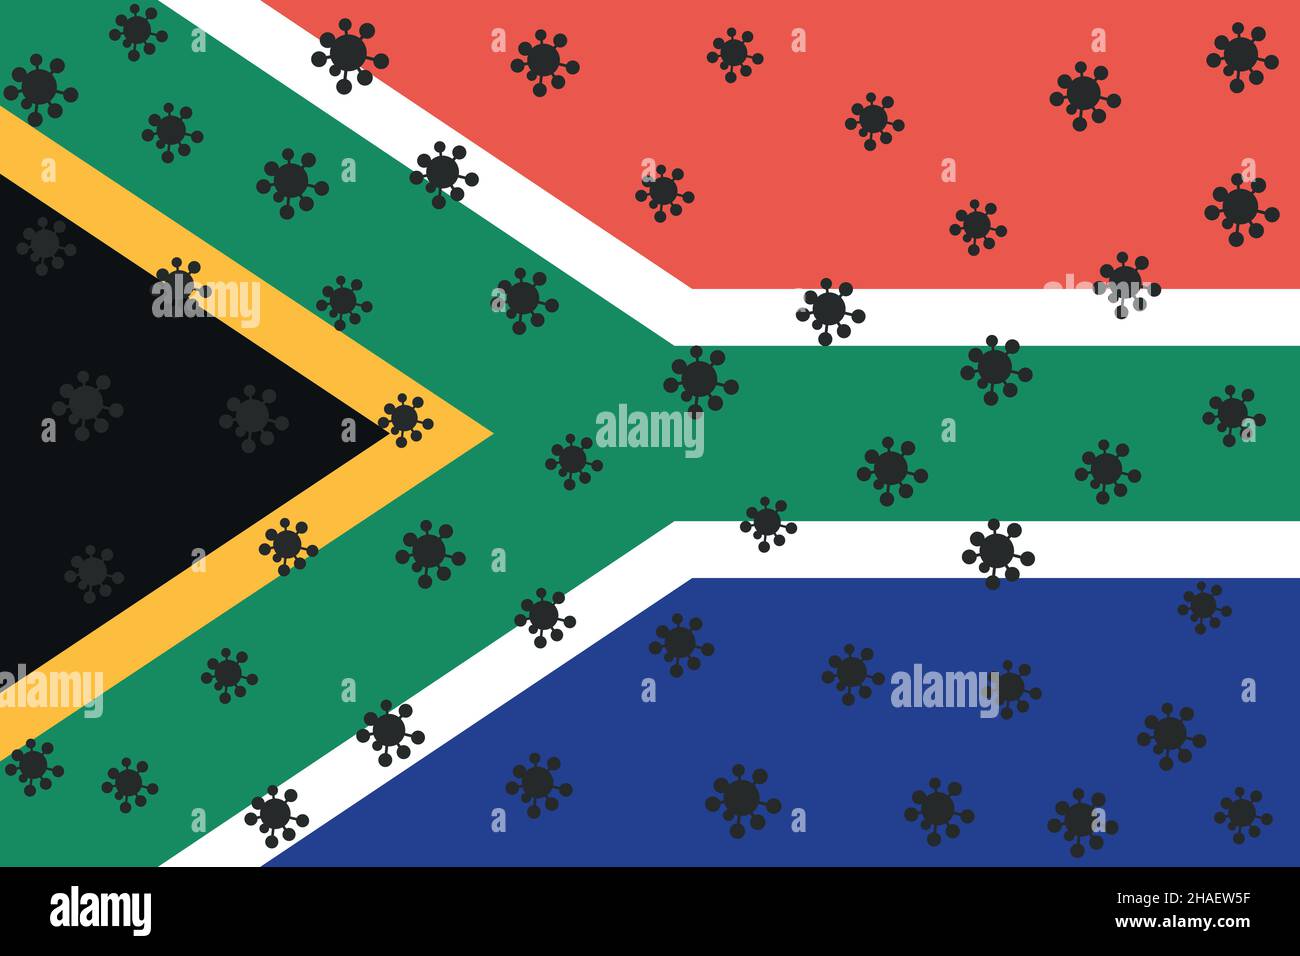 Abbildung von Viruszellen über Südafrika-Flag-Vektor-Abbildung. Covid Coronavirus-Warnmeldungsvariationskonzept Stockfoto